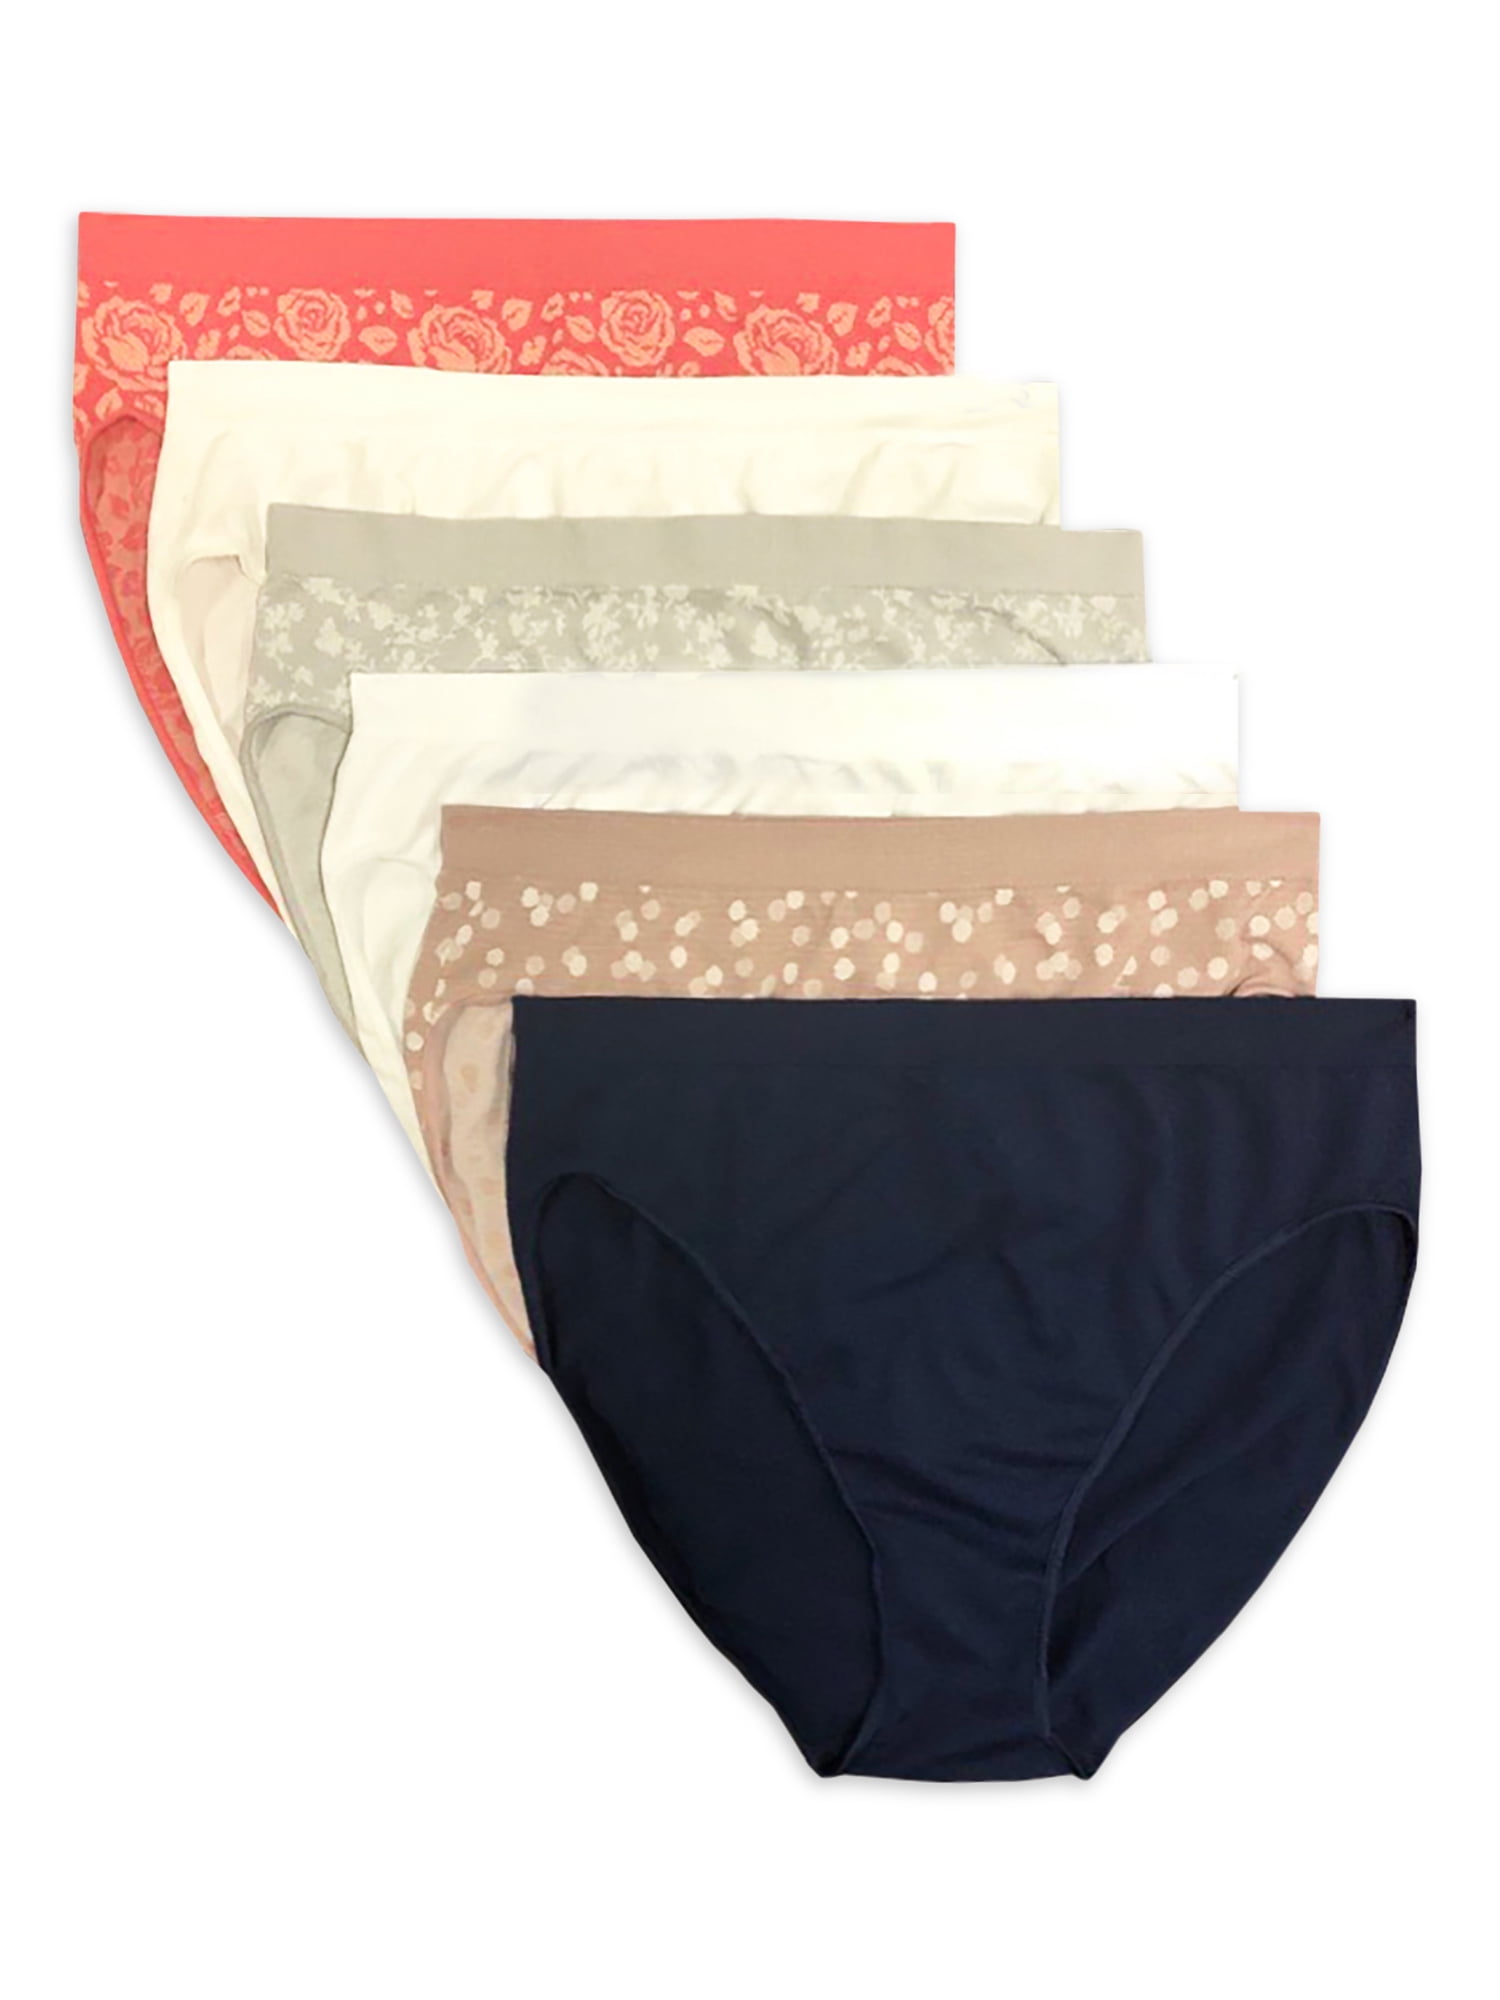 Secret Treasures Women's Seamless High-Cut Panties, 6-Pack